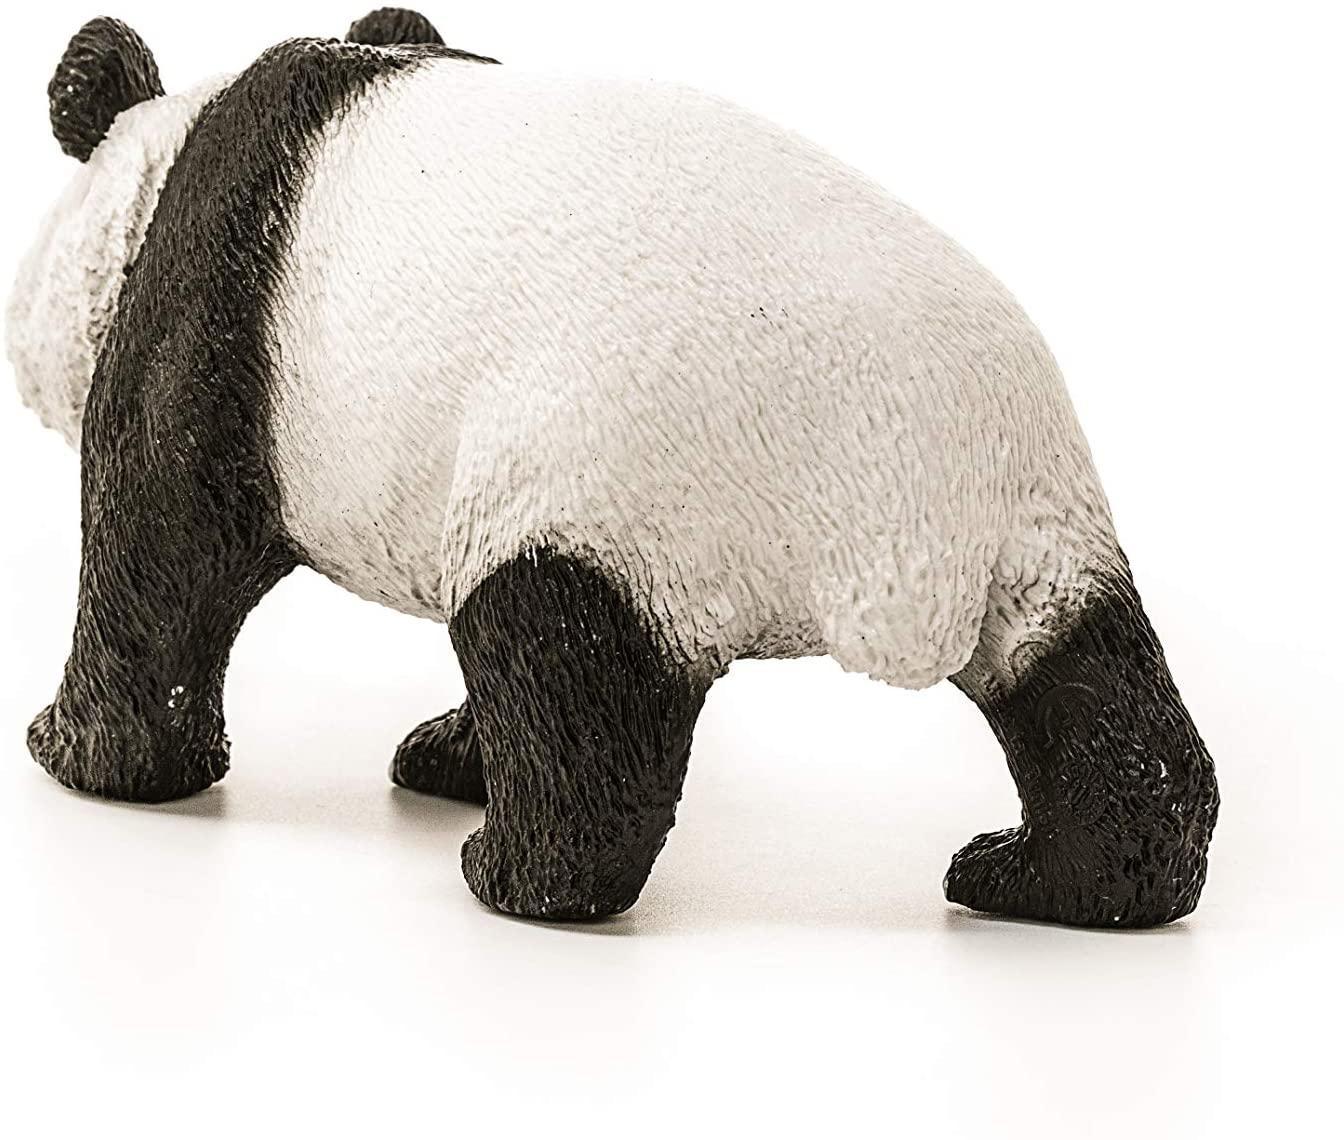 Schleich Wild Life Panda Male Toy Figurine - image 4 of 4